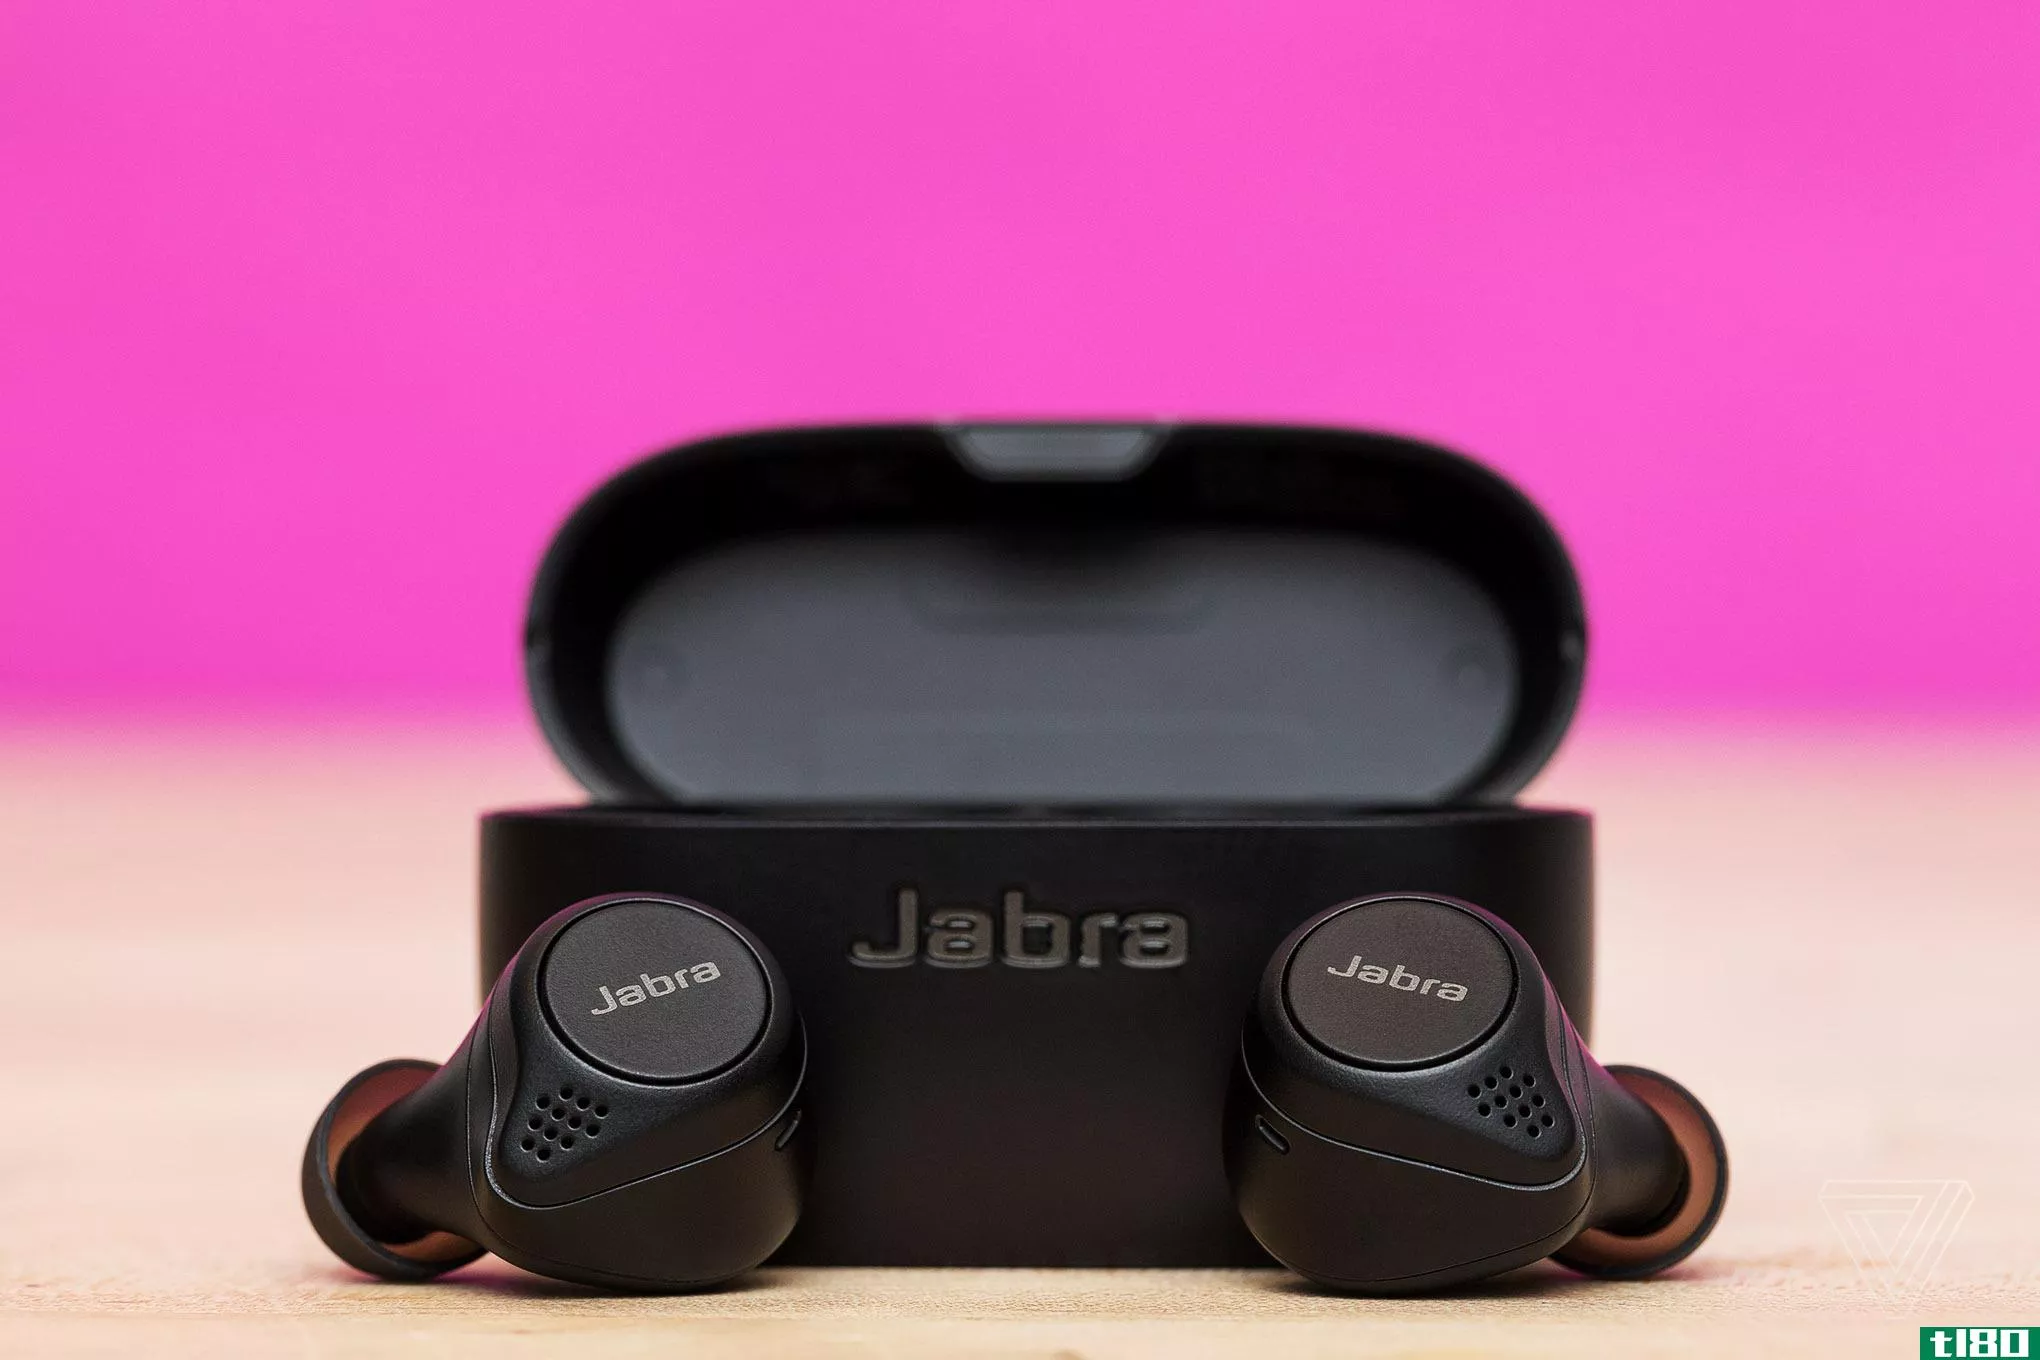 jabra卓越的elite 75t真正无线耳塞在newegg的翻新价为100美元